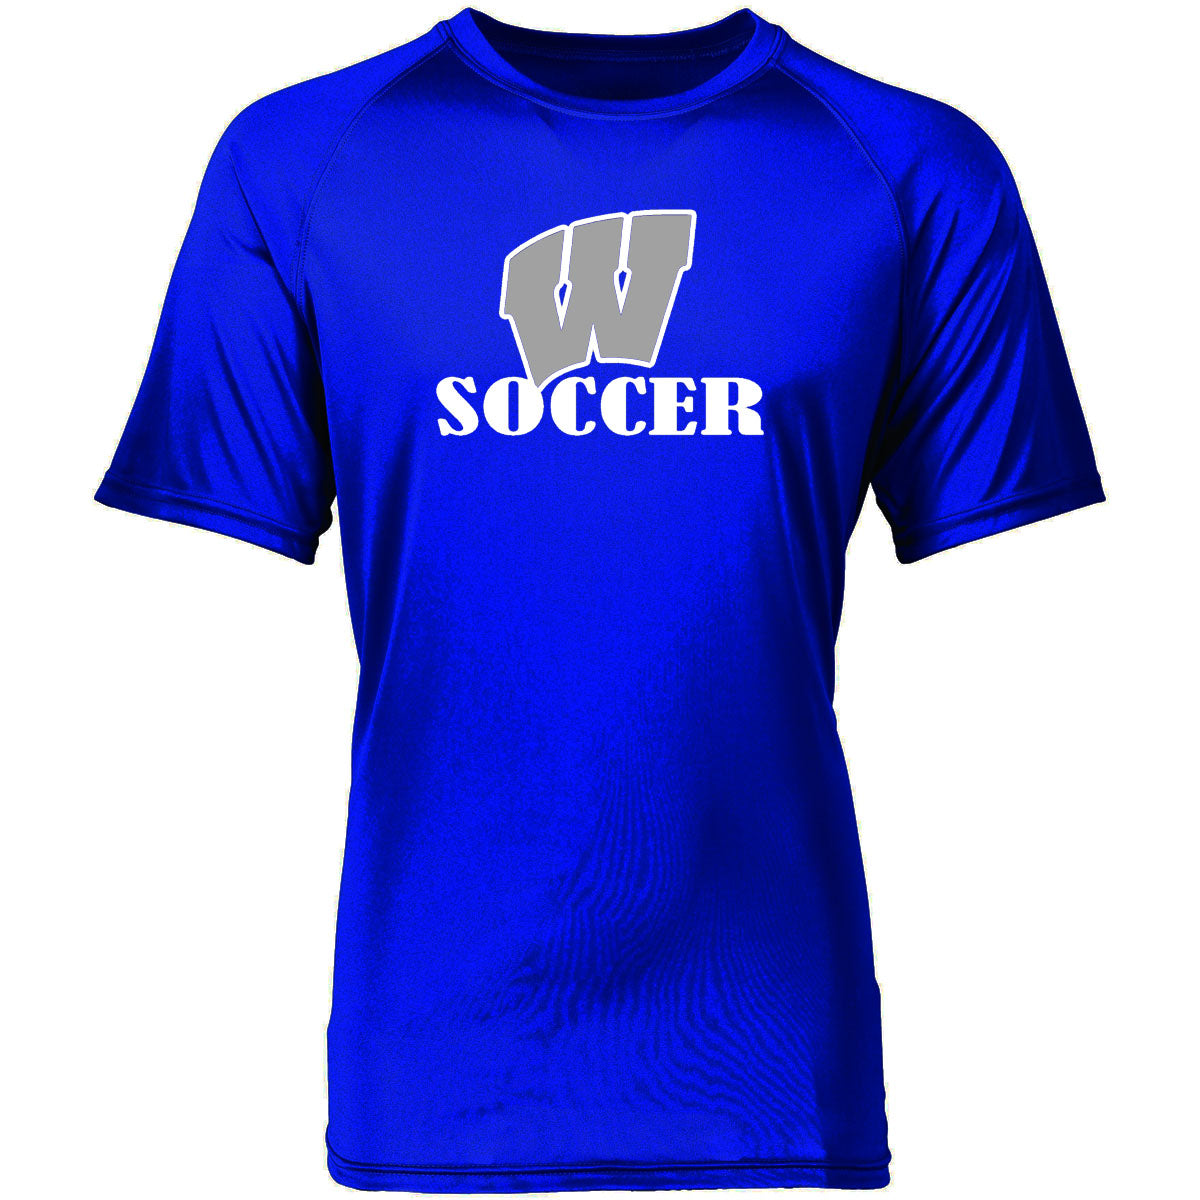 Windsor - Soccer - W Soccer - Royal DriFit Shortsleeve Tee (2790/2791) - Southern Grace Creations